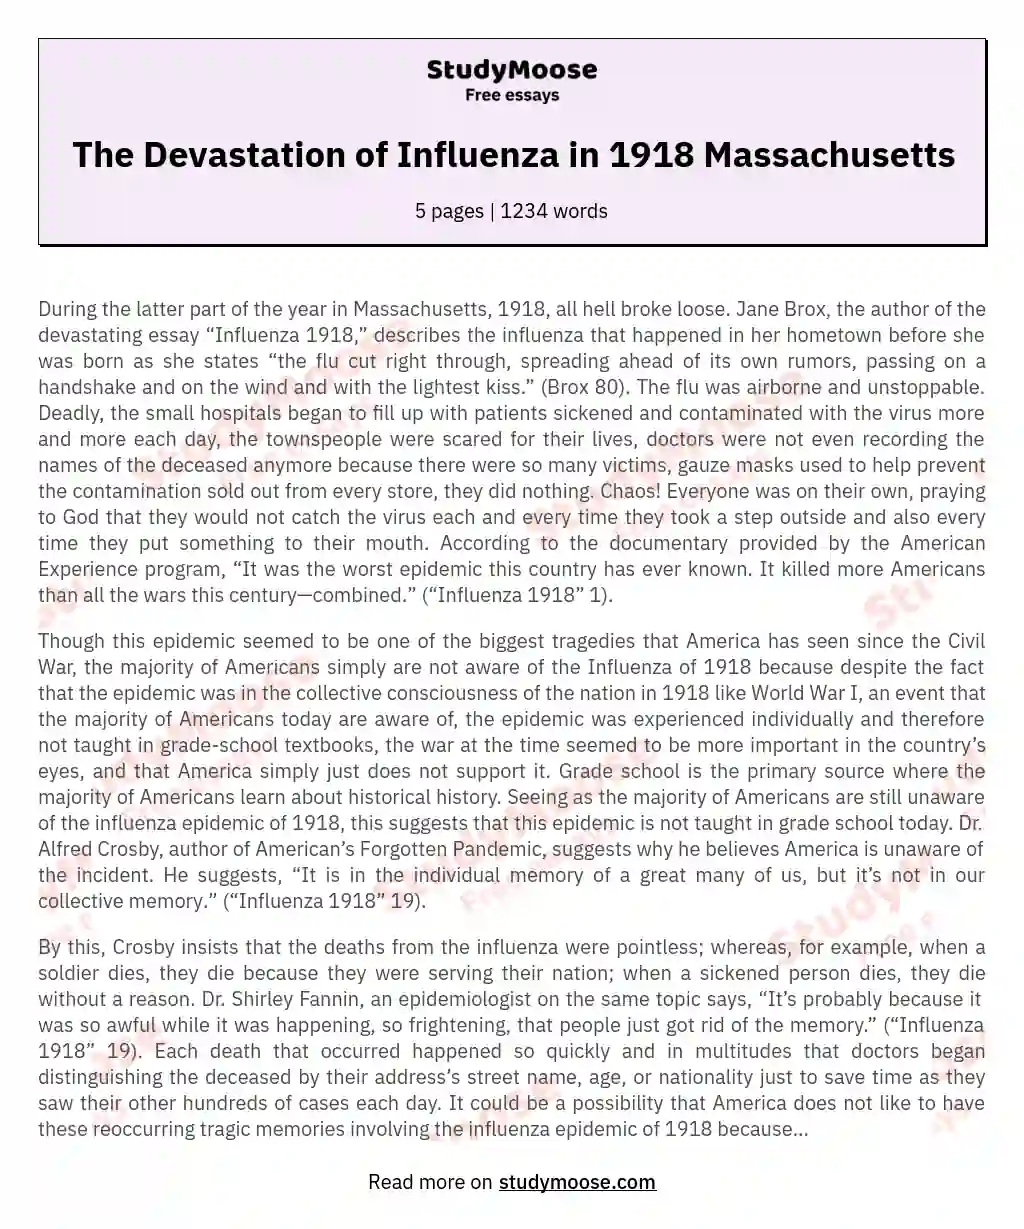 The Devastation of Influenza in 1918 Massachusetts essay